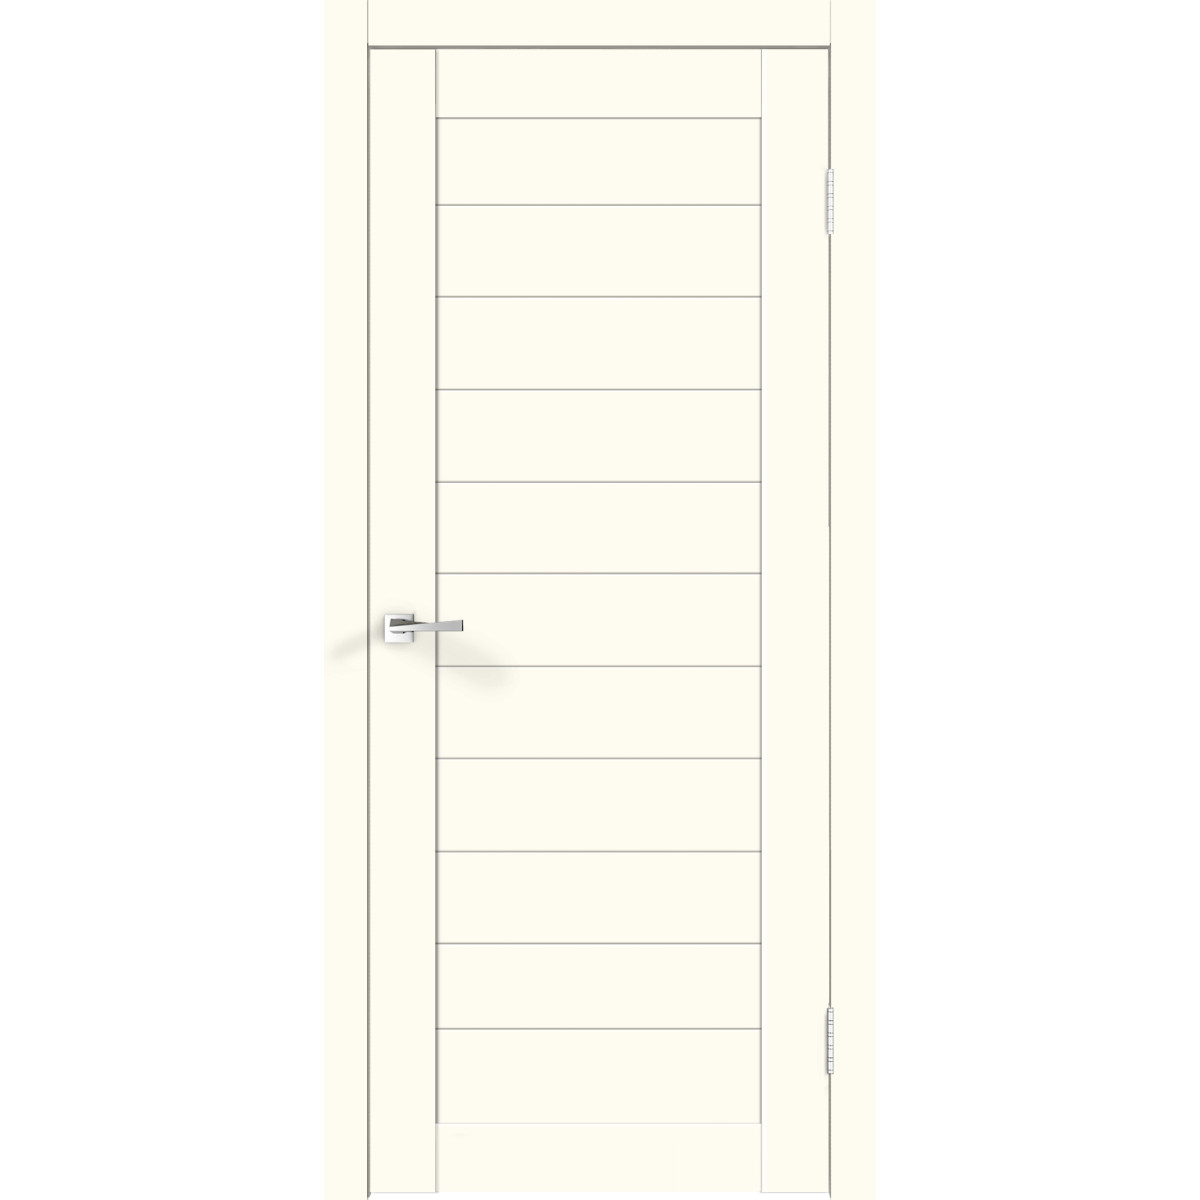 Дверь межкомнатная под покраску Симпл 90х200 см с фурнитурой, цвет белый